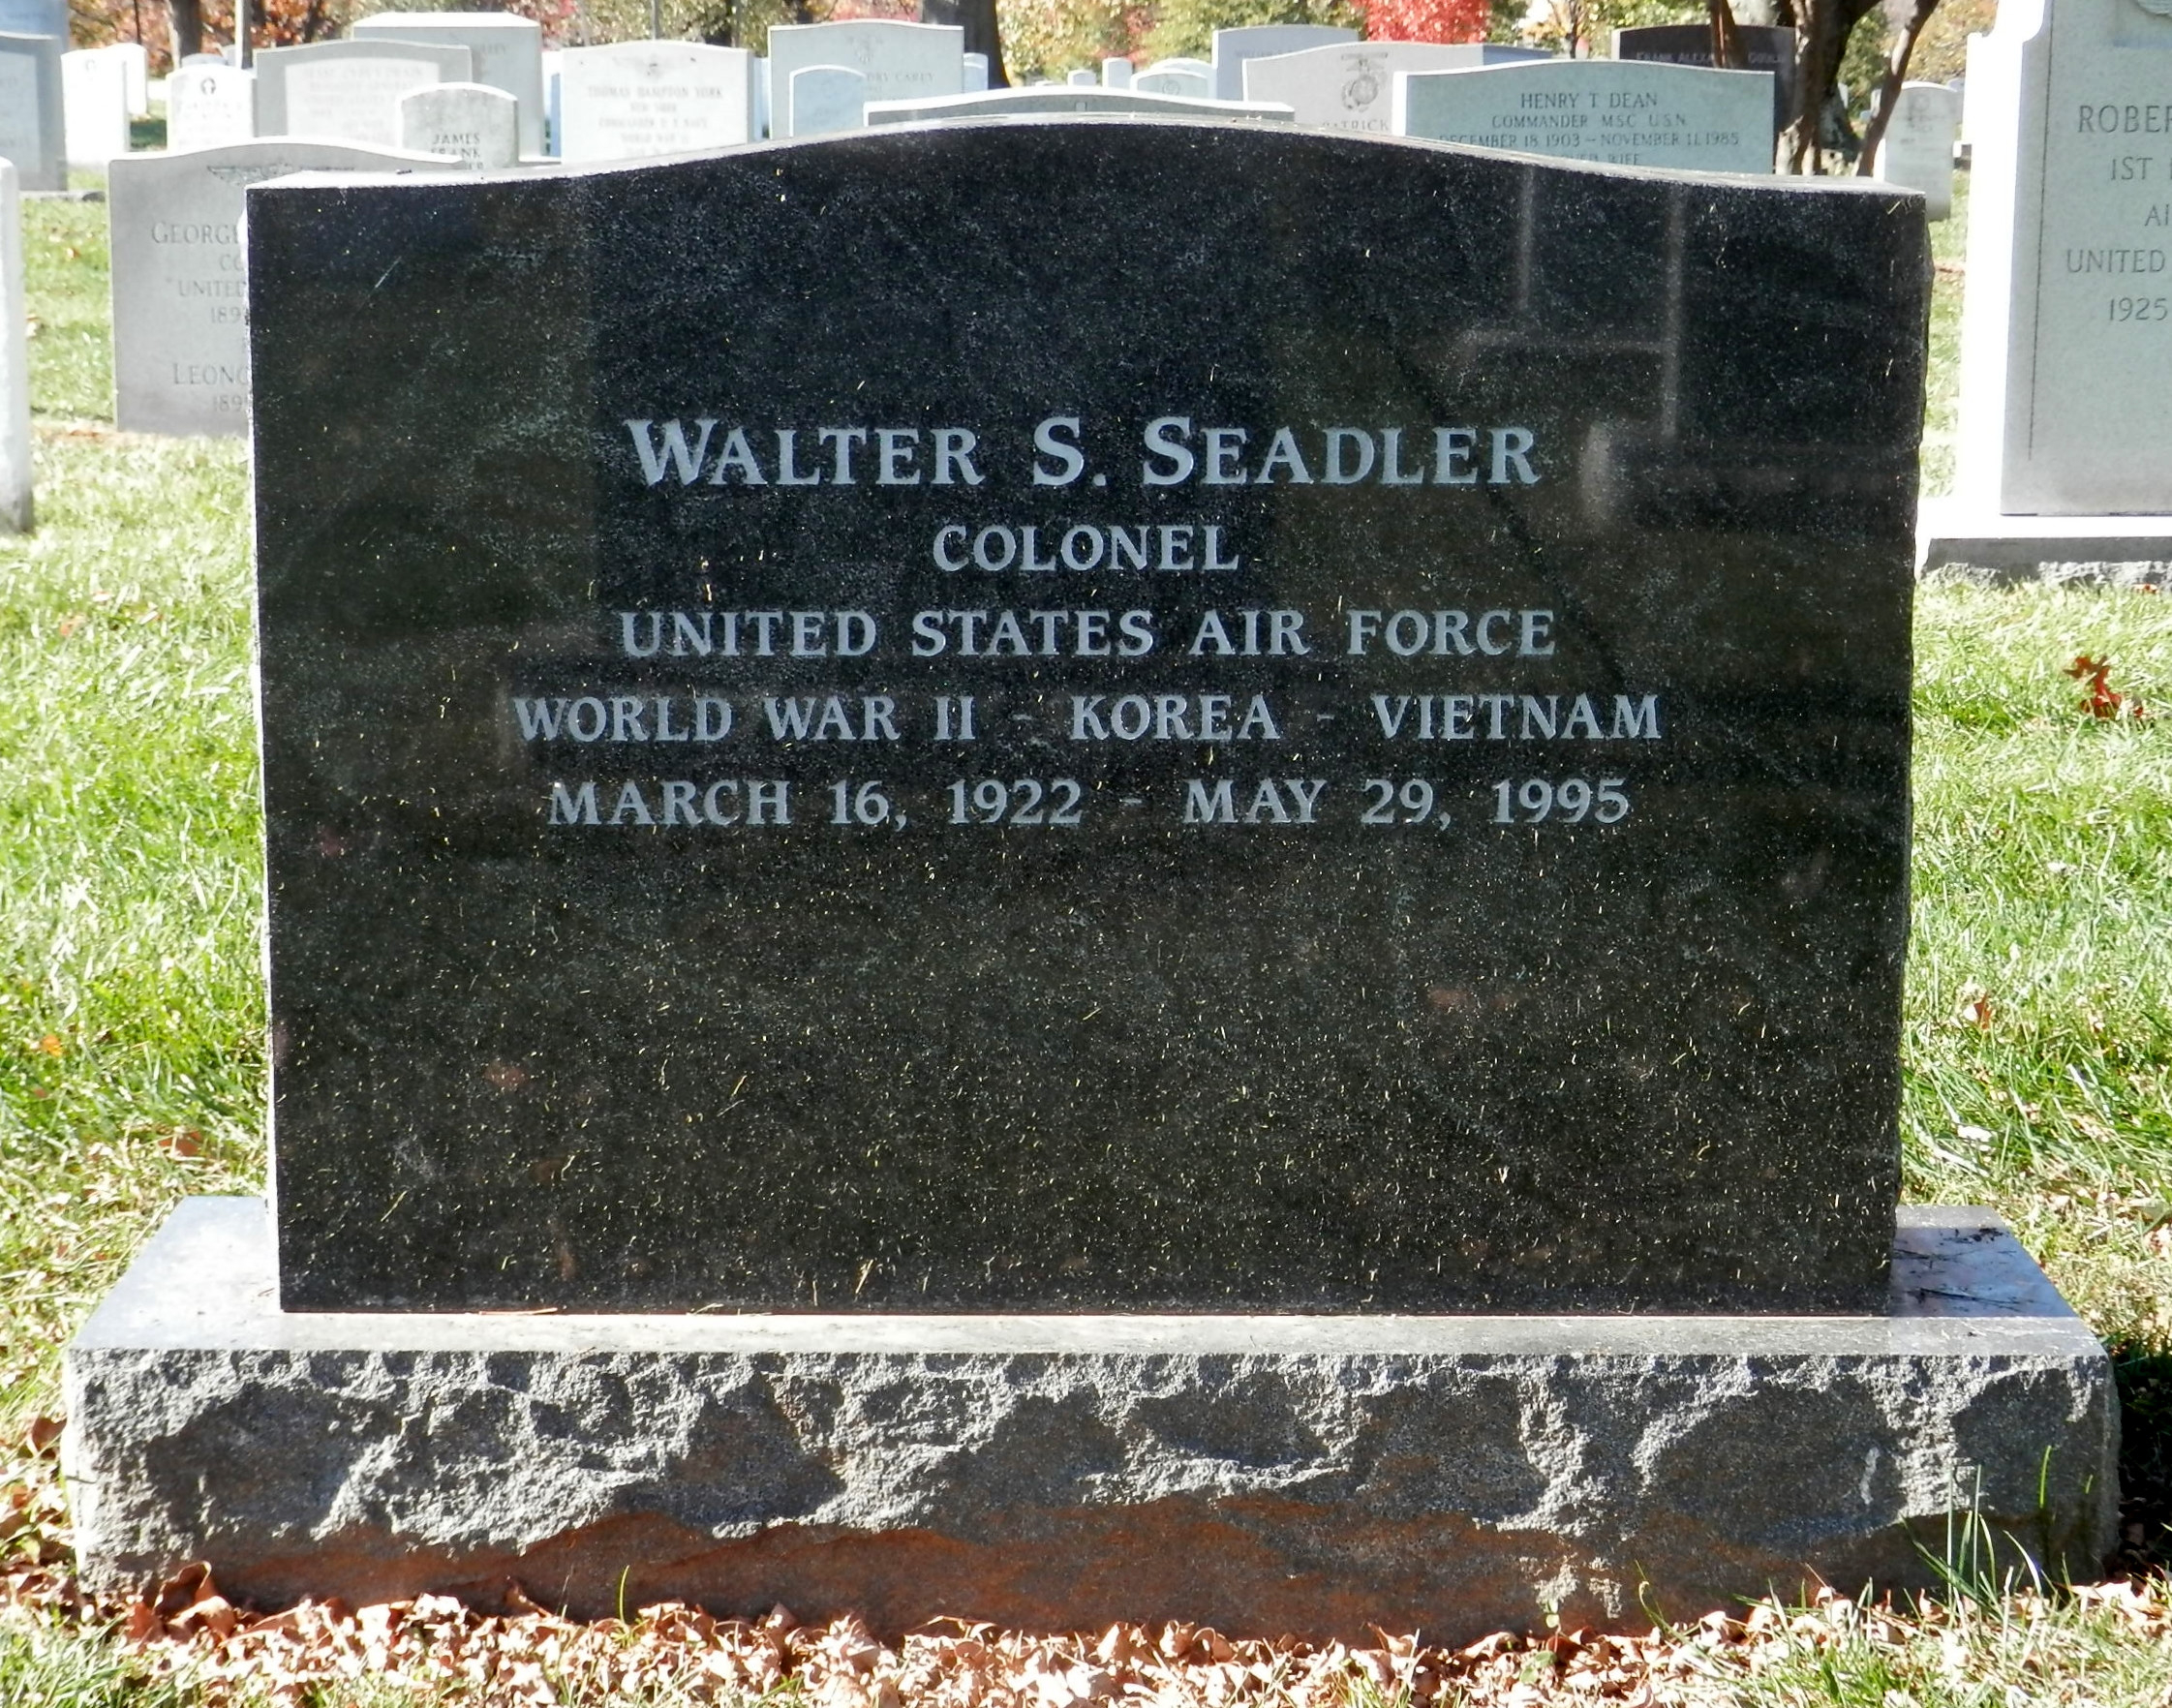 Colonel Walter S. Seadler is buried in Arlington Cemetery.